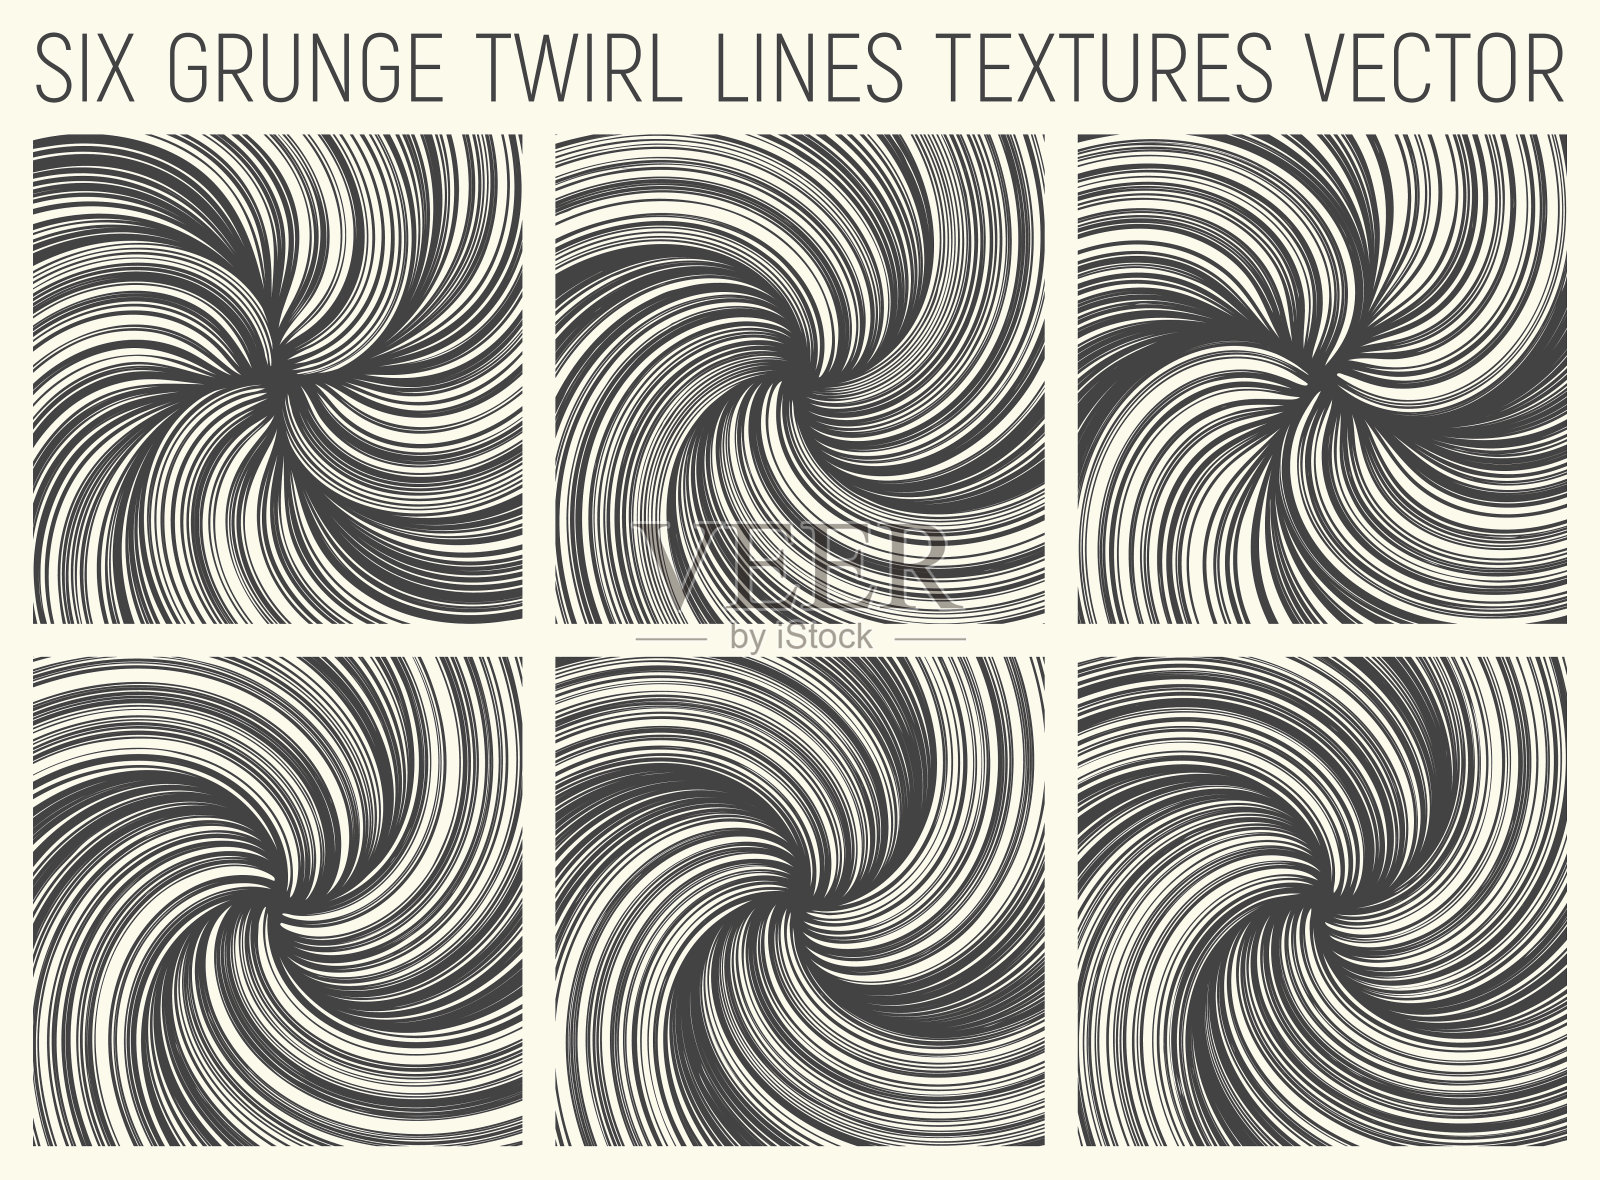 6 Grunge旋转线纹理向量设计元素图片